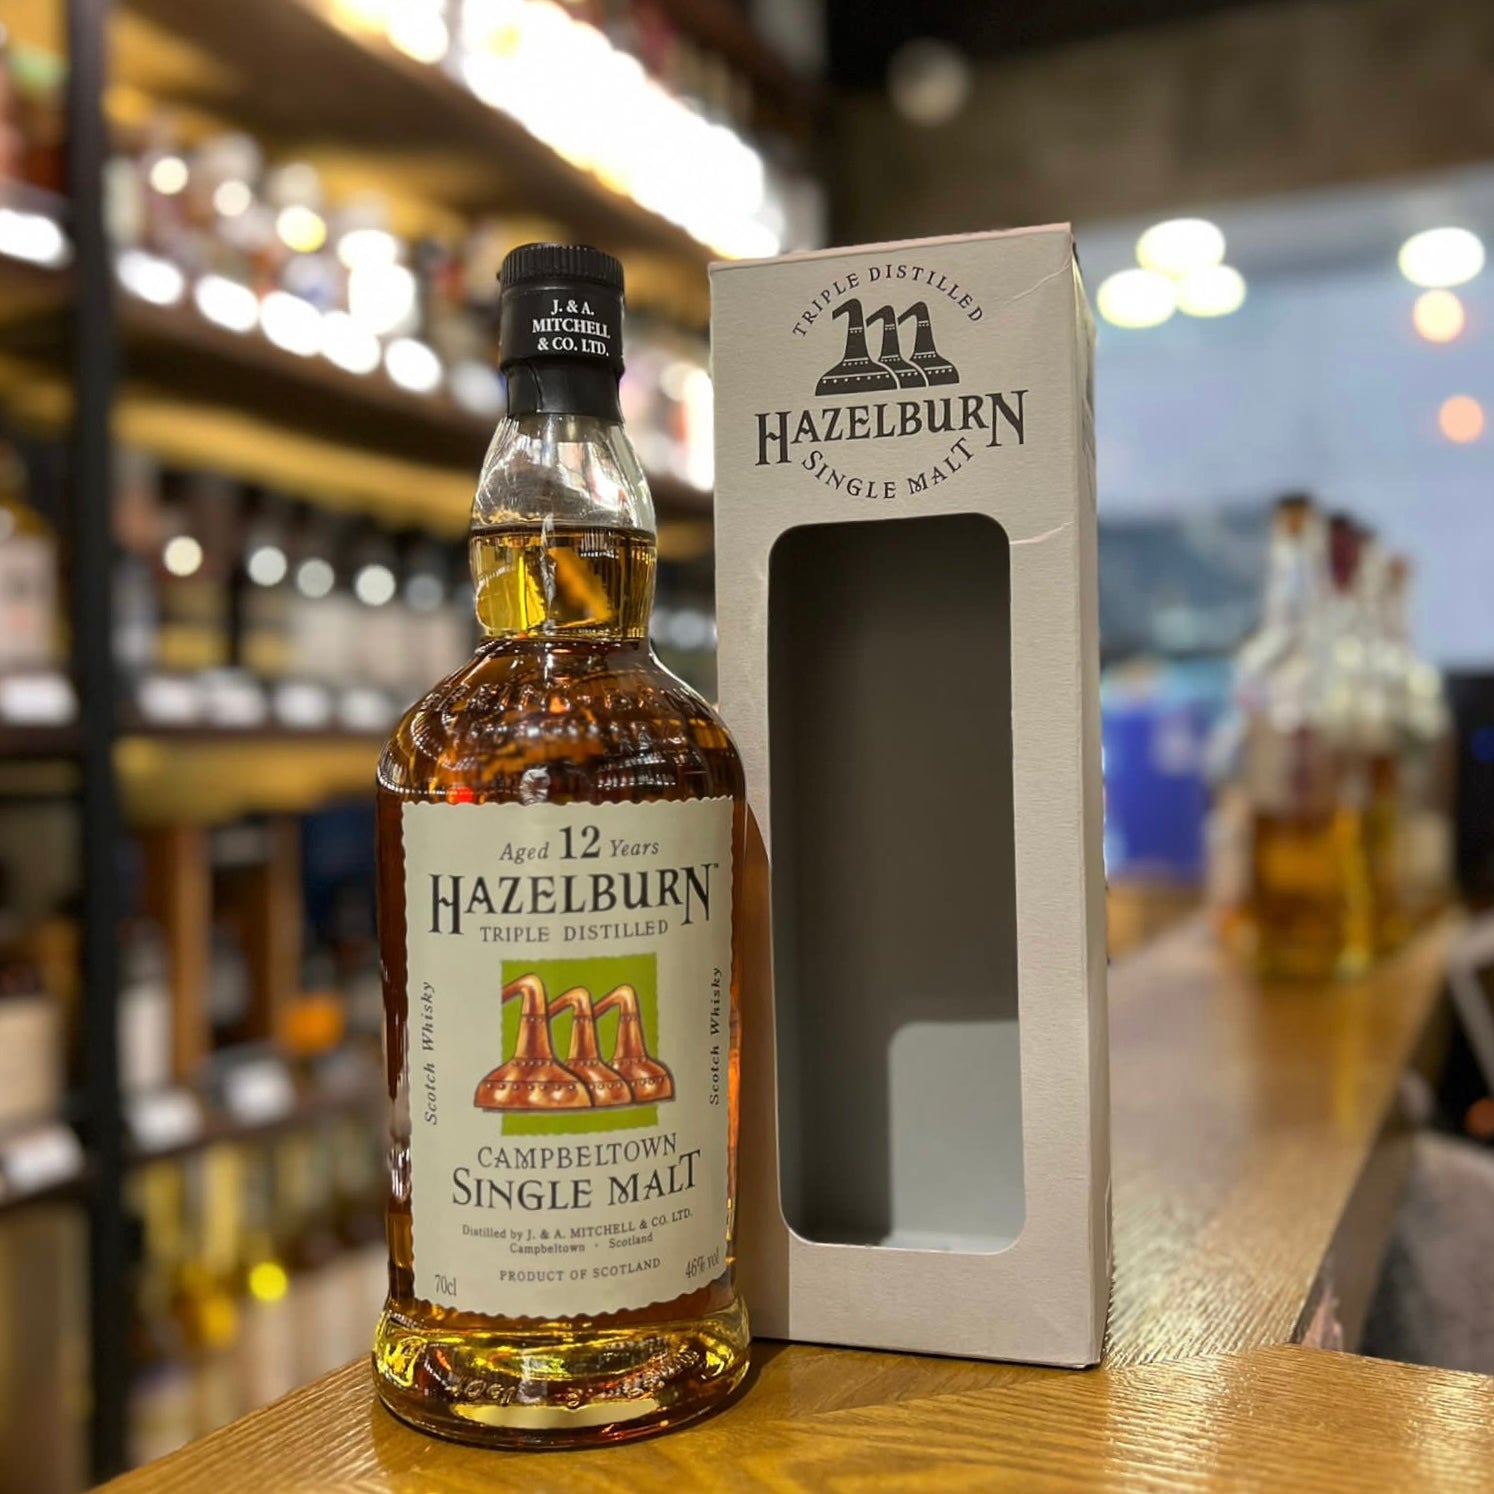 Hazelburn 12 Year Old Single Malt Scotch Whisky (2014 Release)